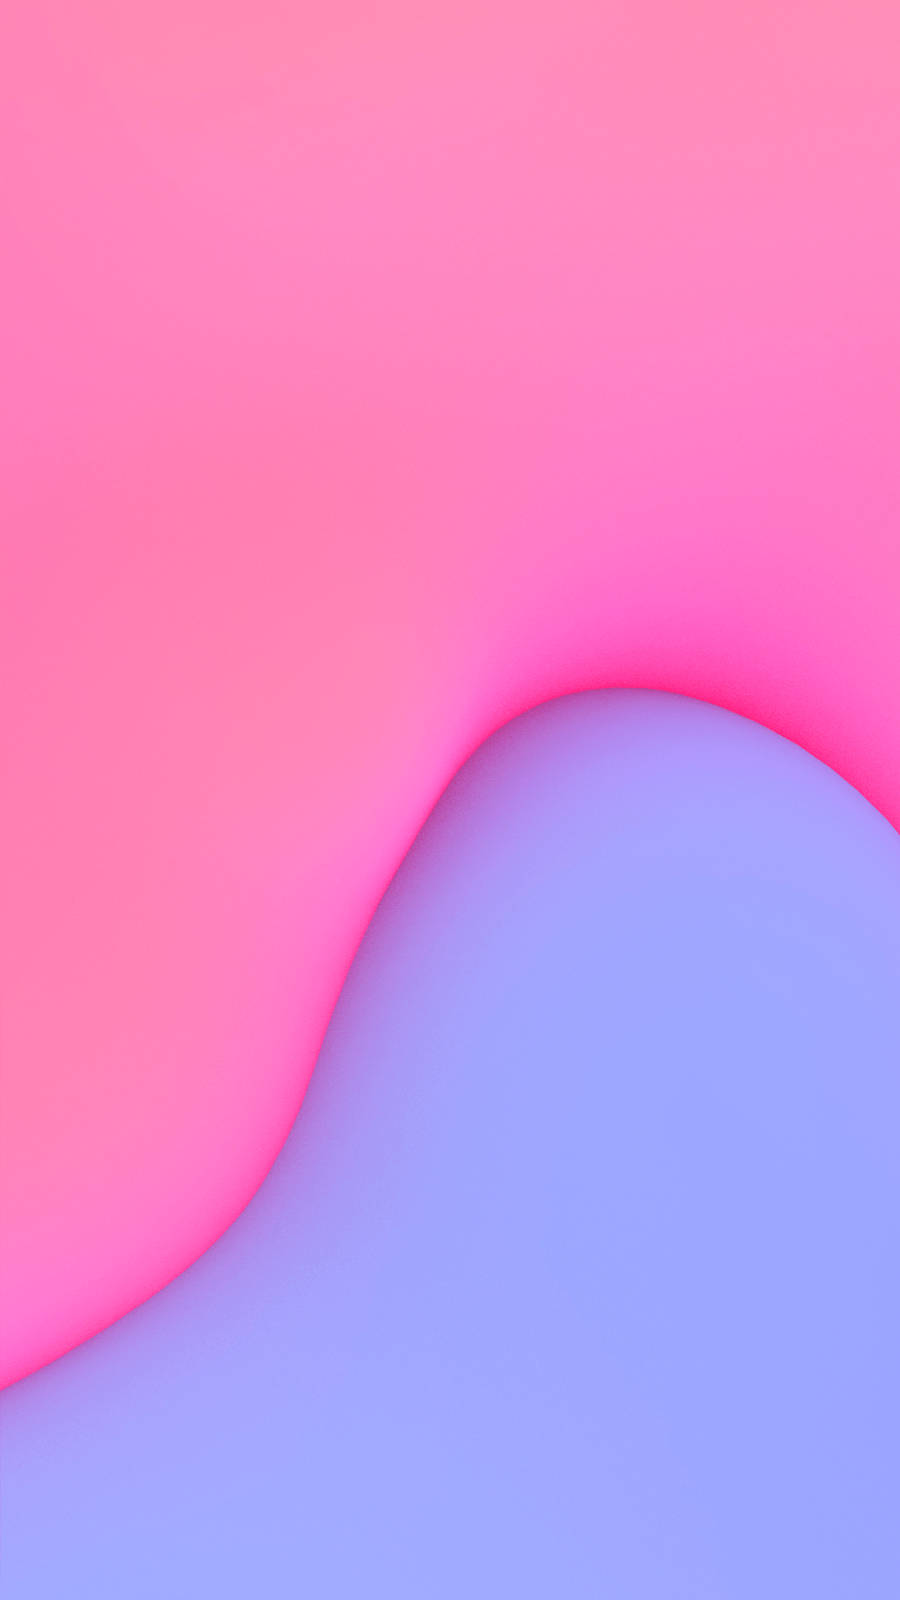 Pixel3 Xl Pink Und Lila Wallpaper